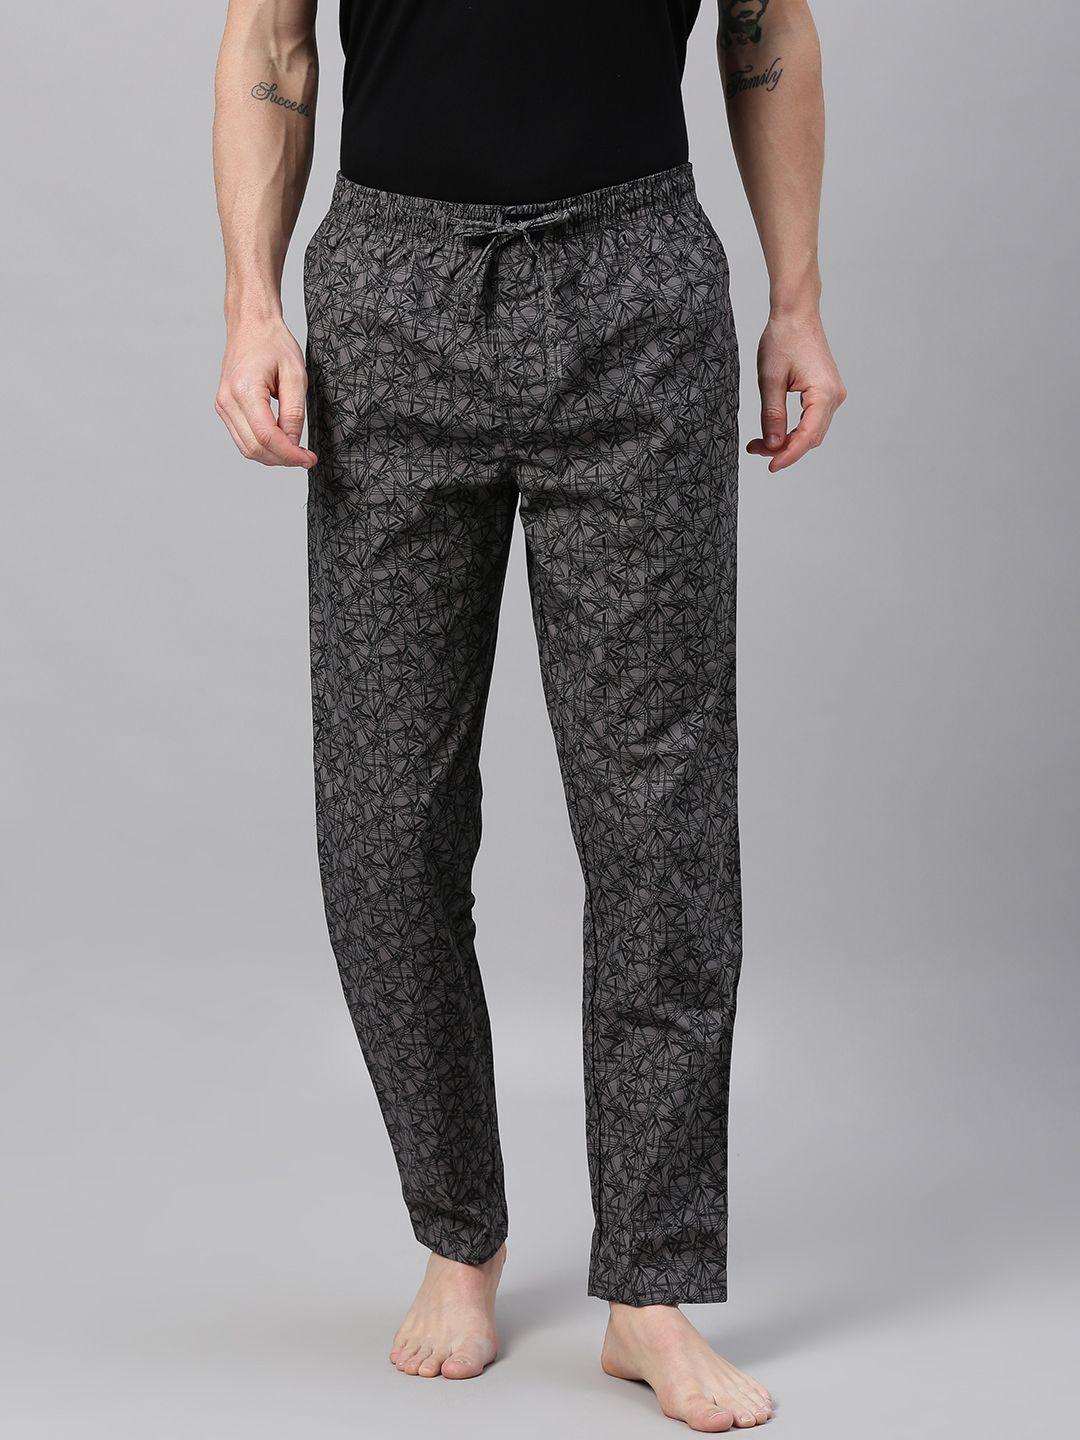 pepe-jeans-men-grey-&-black-printed-lounge-pants